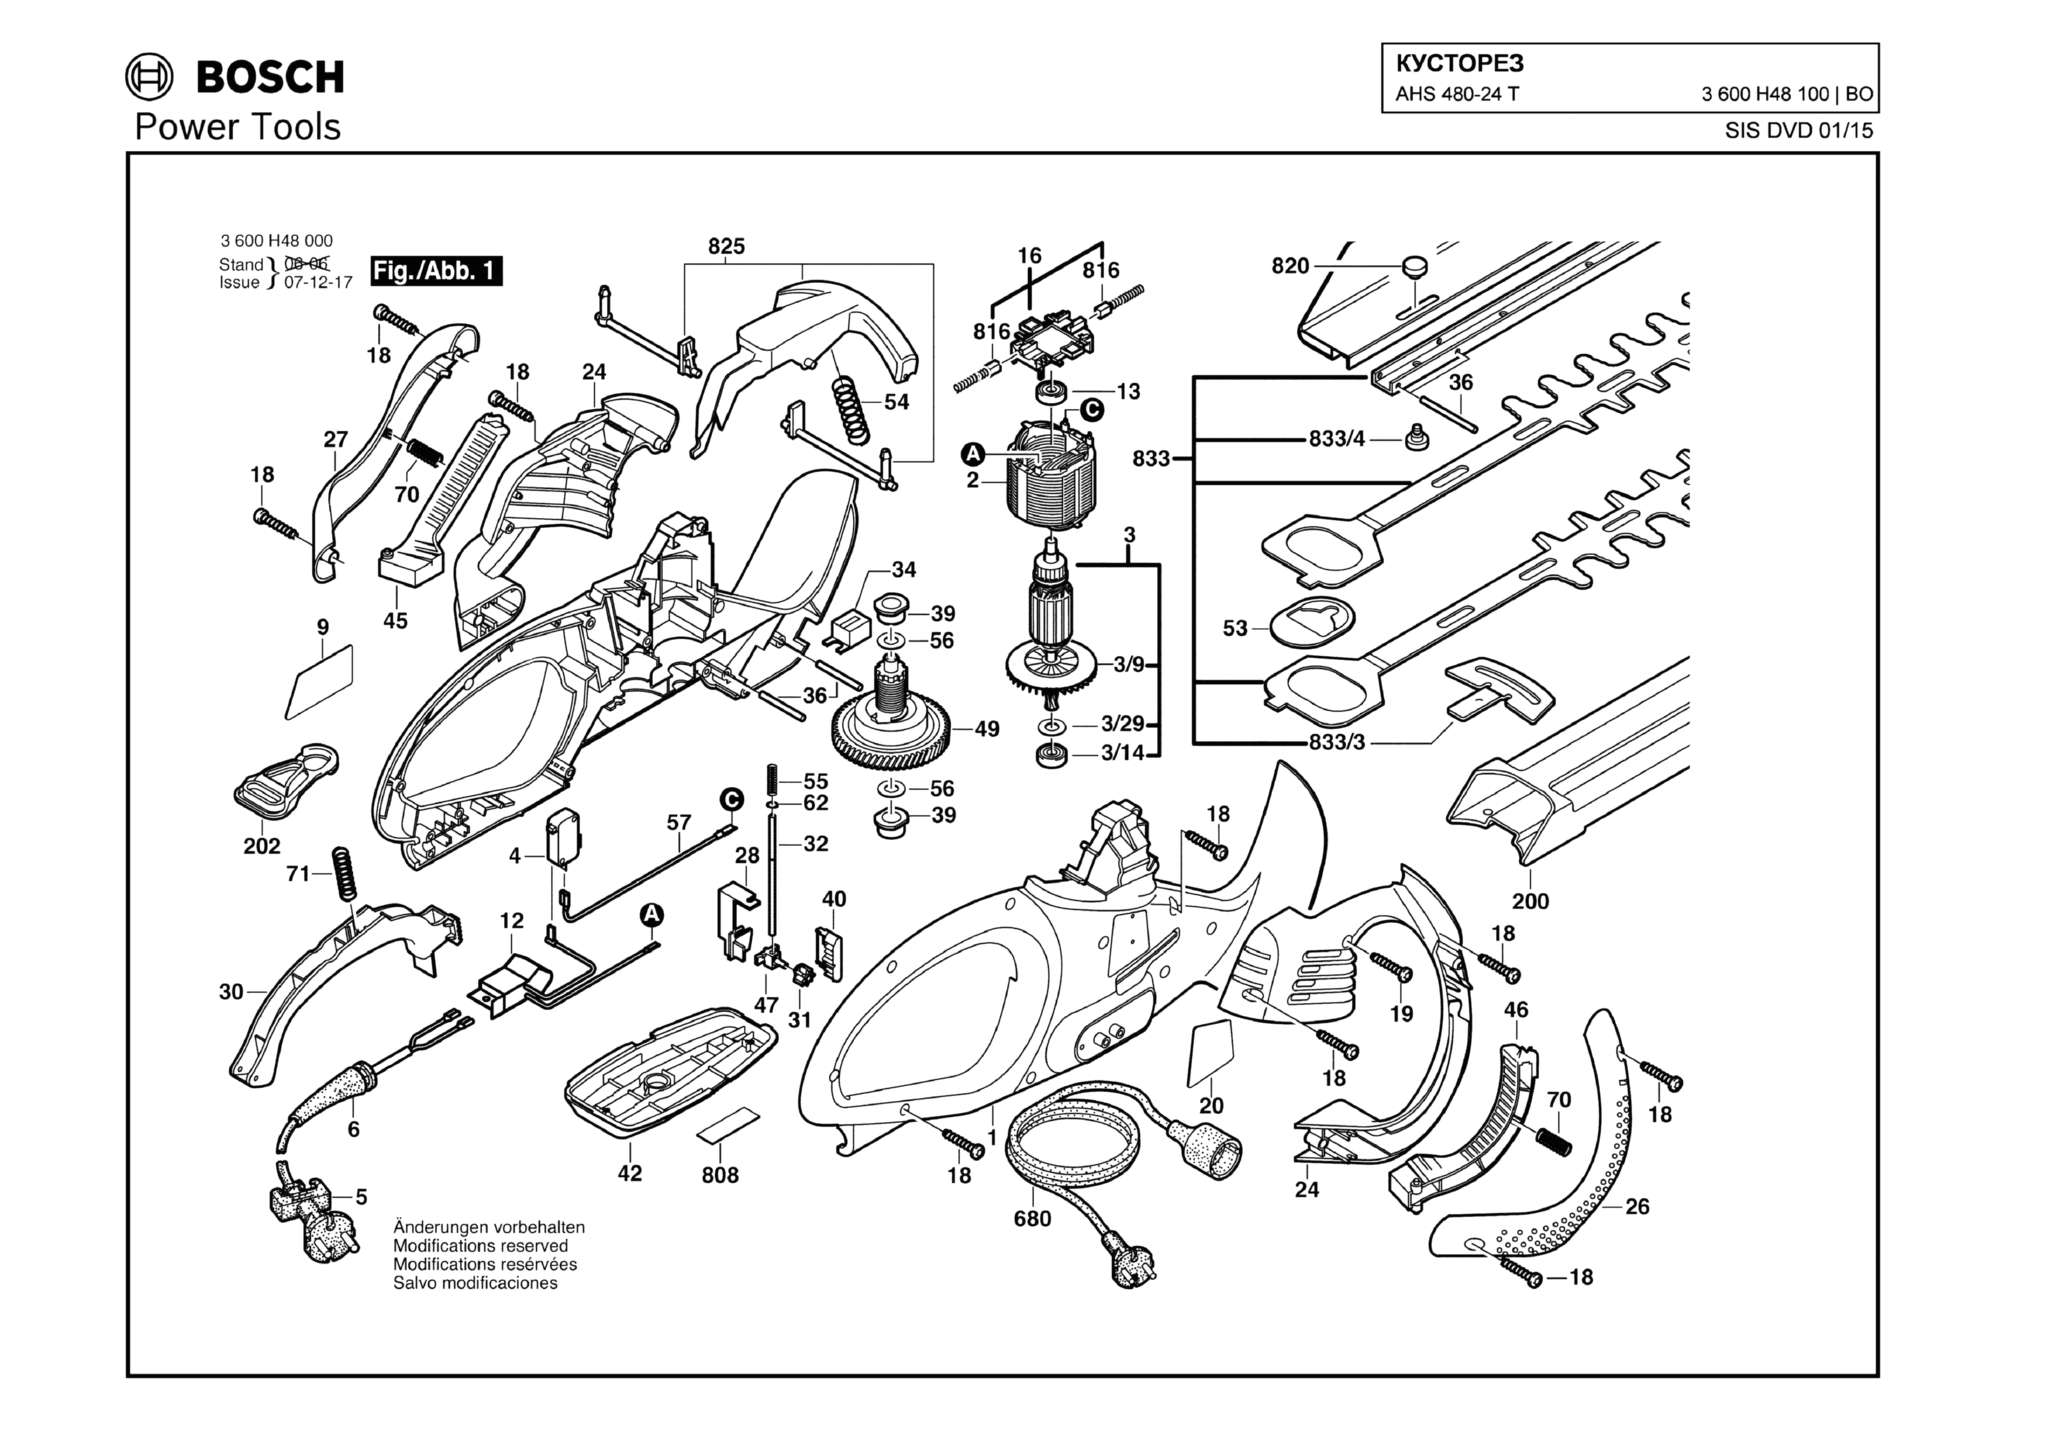 Запчасти, схема и деталировка Bosch AHS 480-24 T (ТИП 3600H48100)